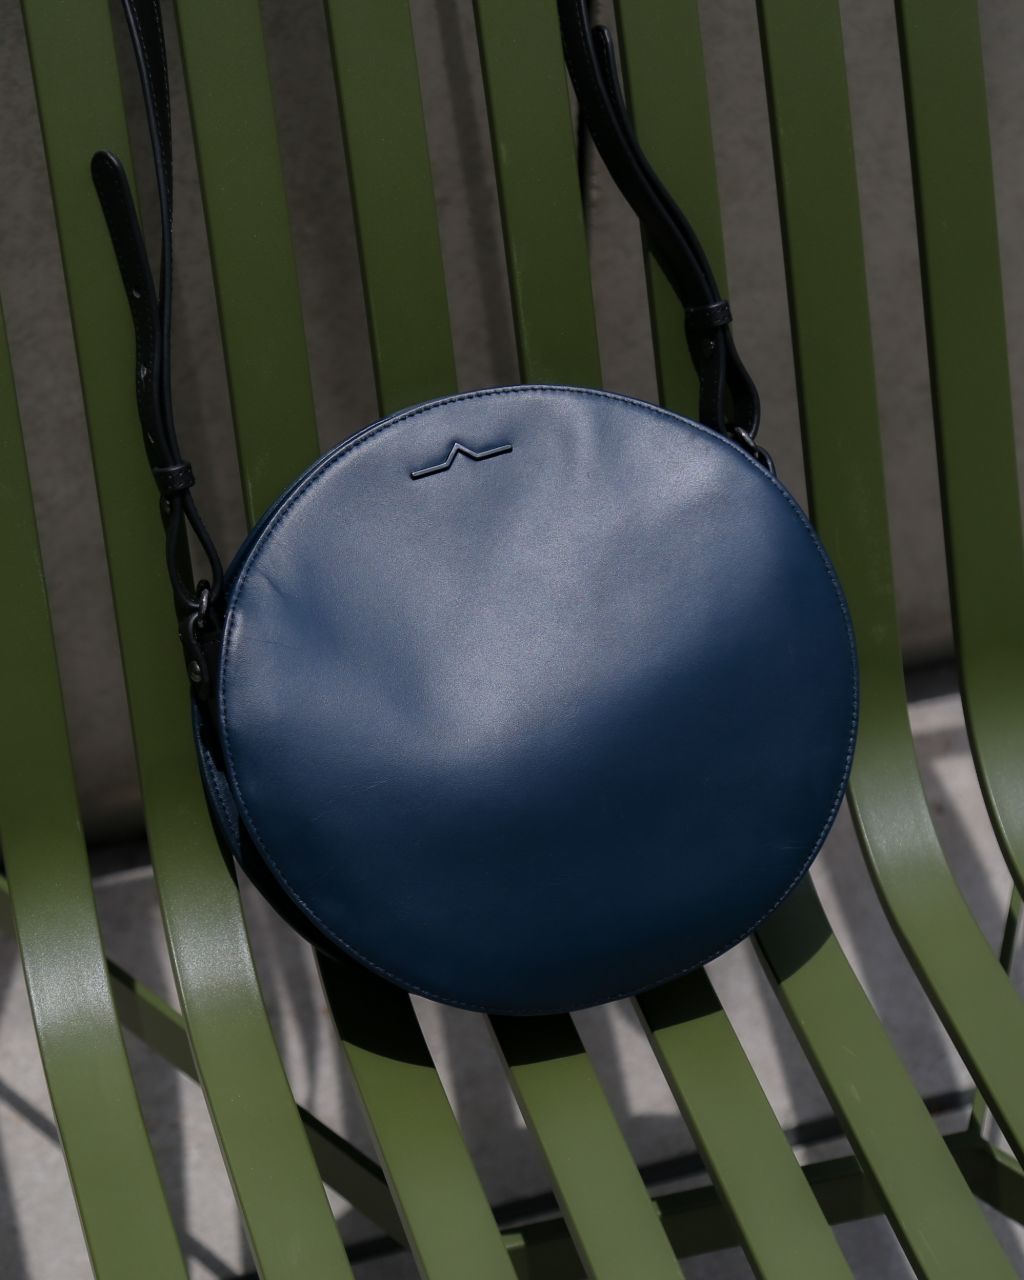 dark blue leather bag on green chair